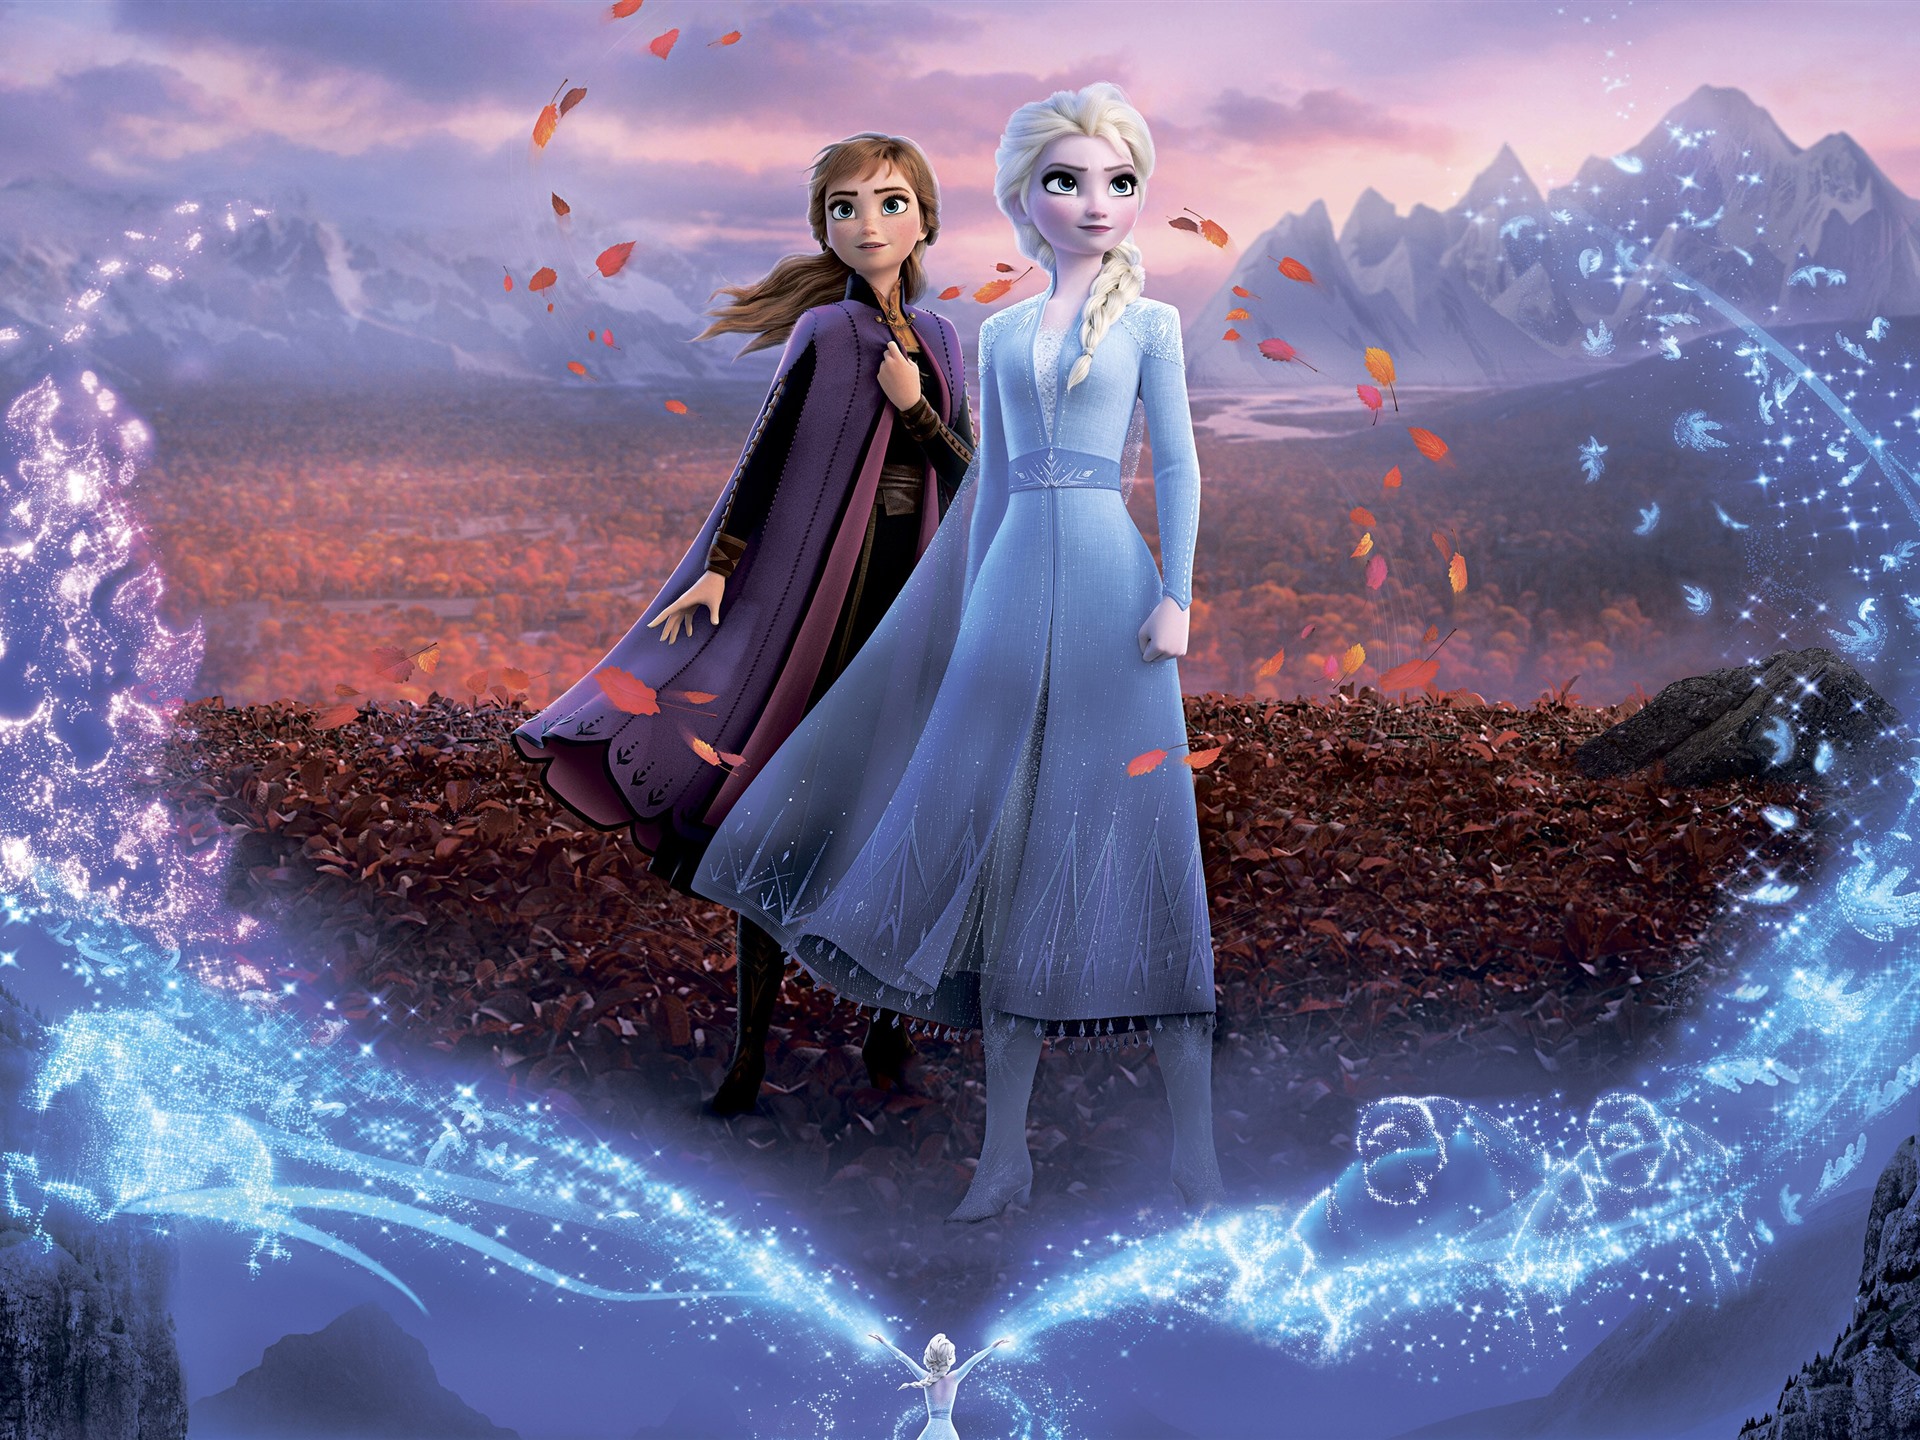 Wallpaper Frozen Disney movie, sisters 3840x2160 UHD 4K Picture, Image